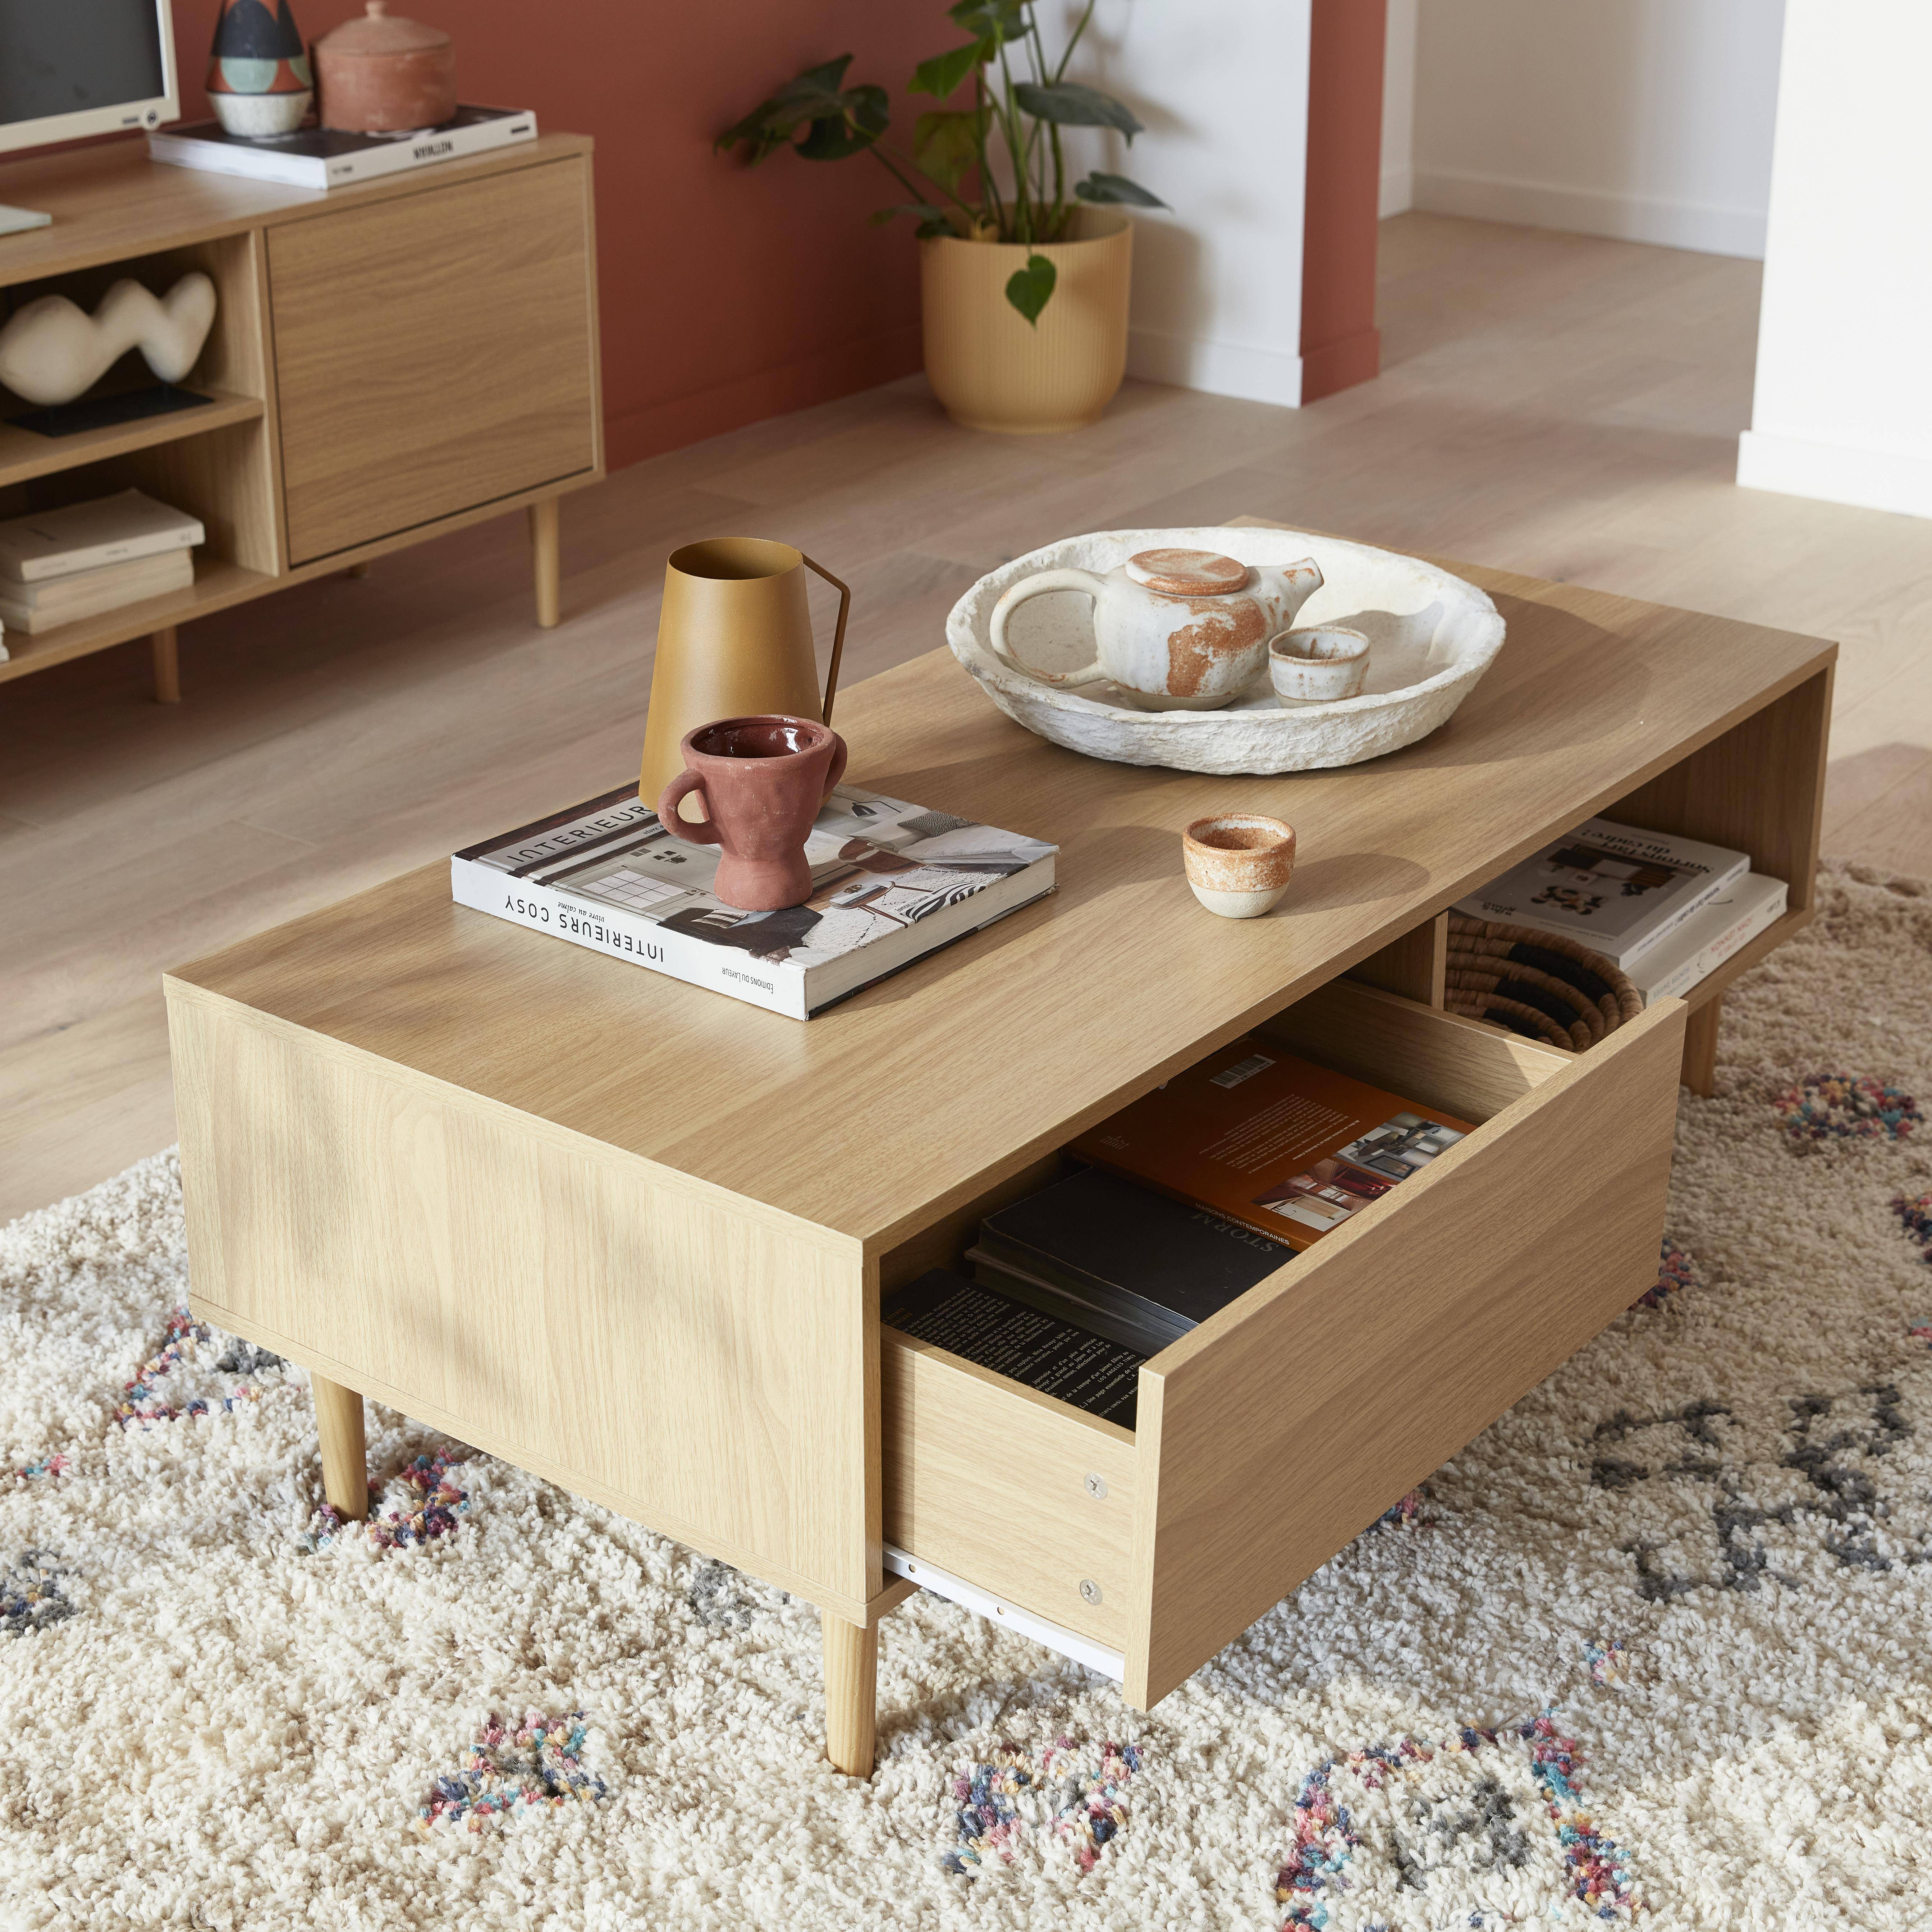 Wood-effect coffee table, 120x55x40cm, Mika, Natural wood colour,sweeek,Photo2